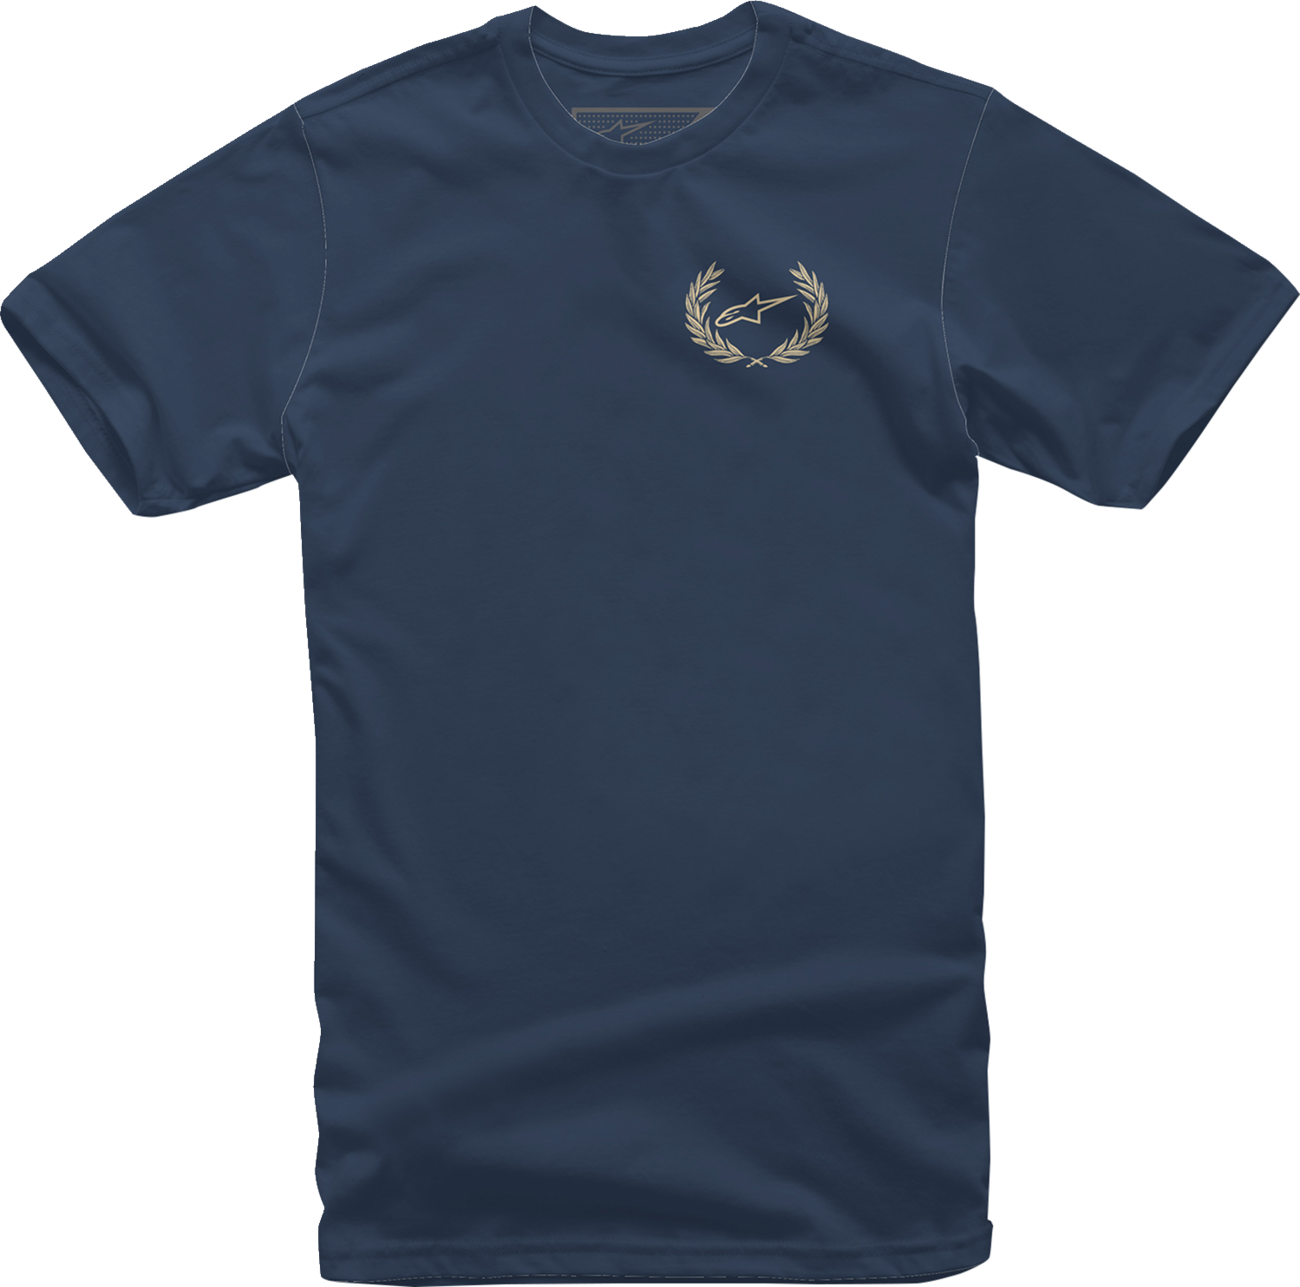 Camiseta ALPINESTARS Corona - Azul marino - Grande 12137258070L 